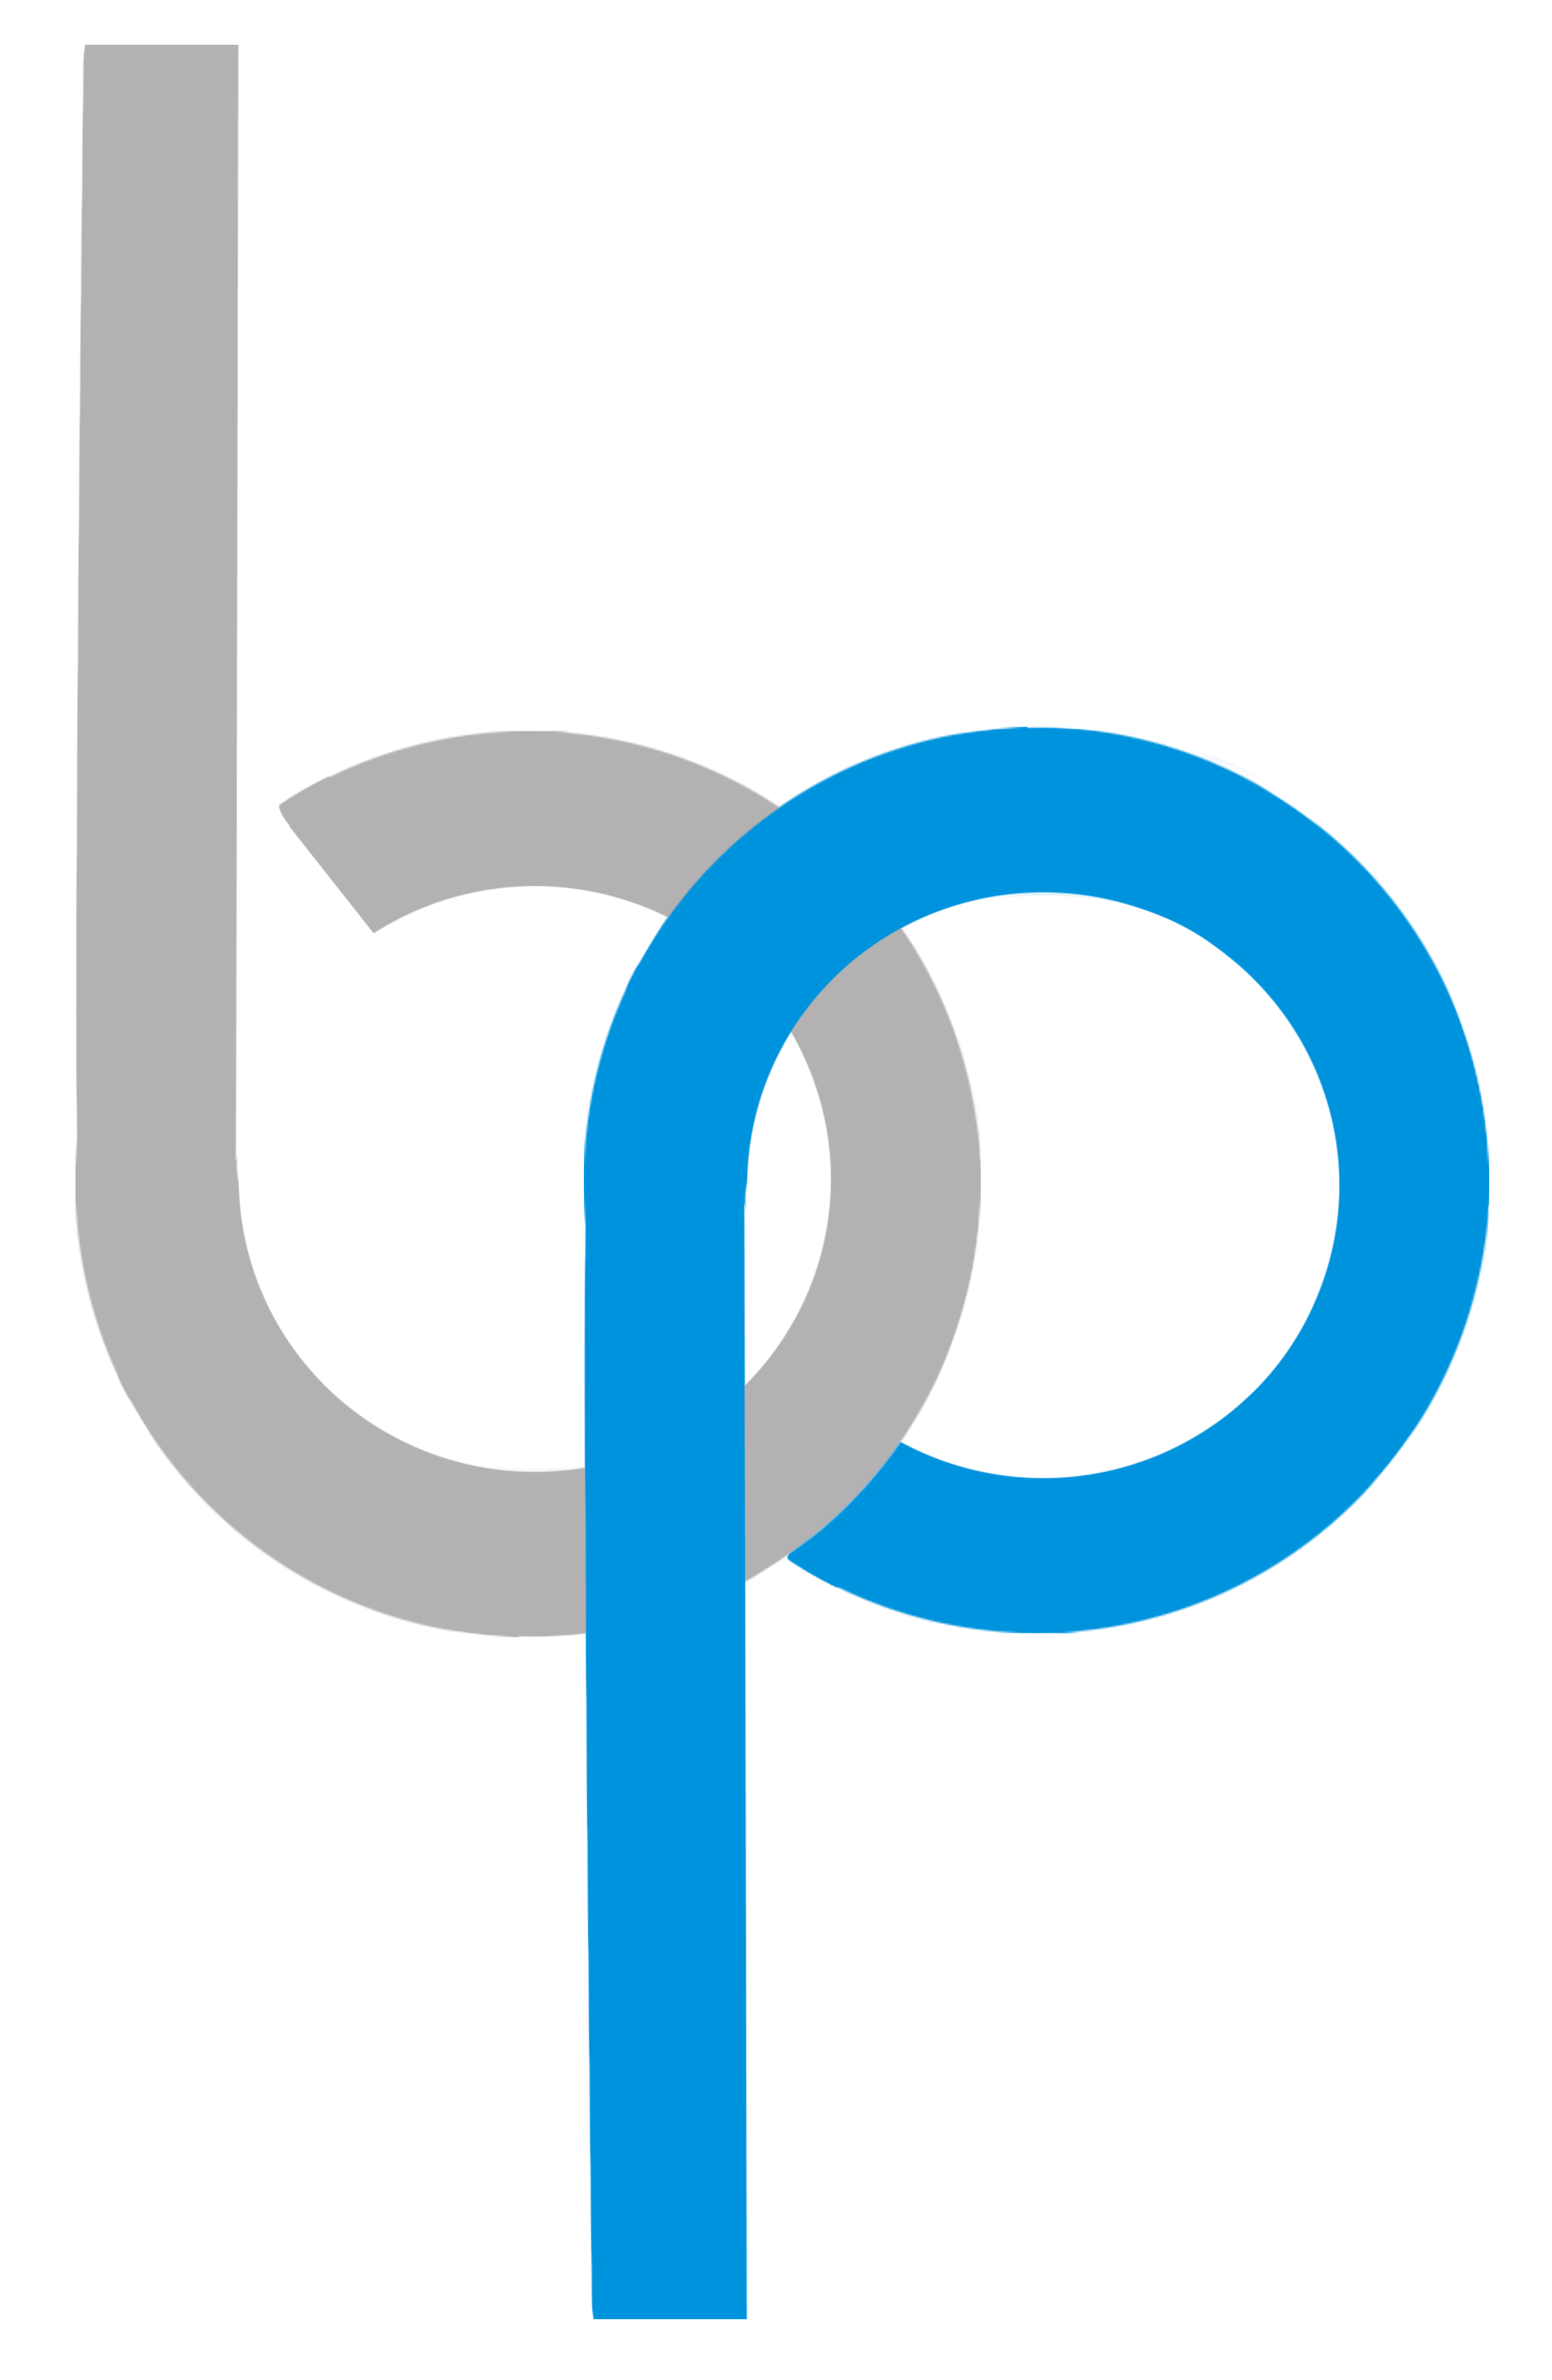 logo_BP